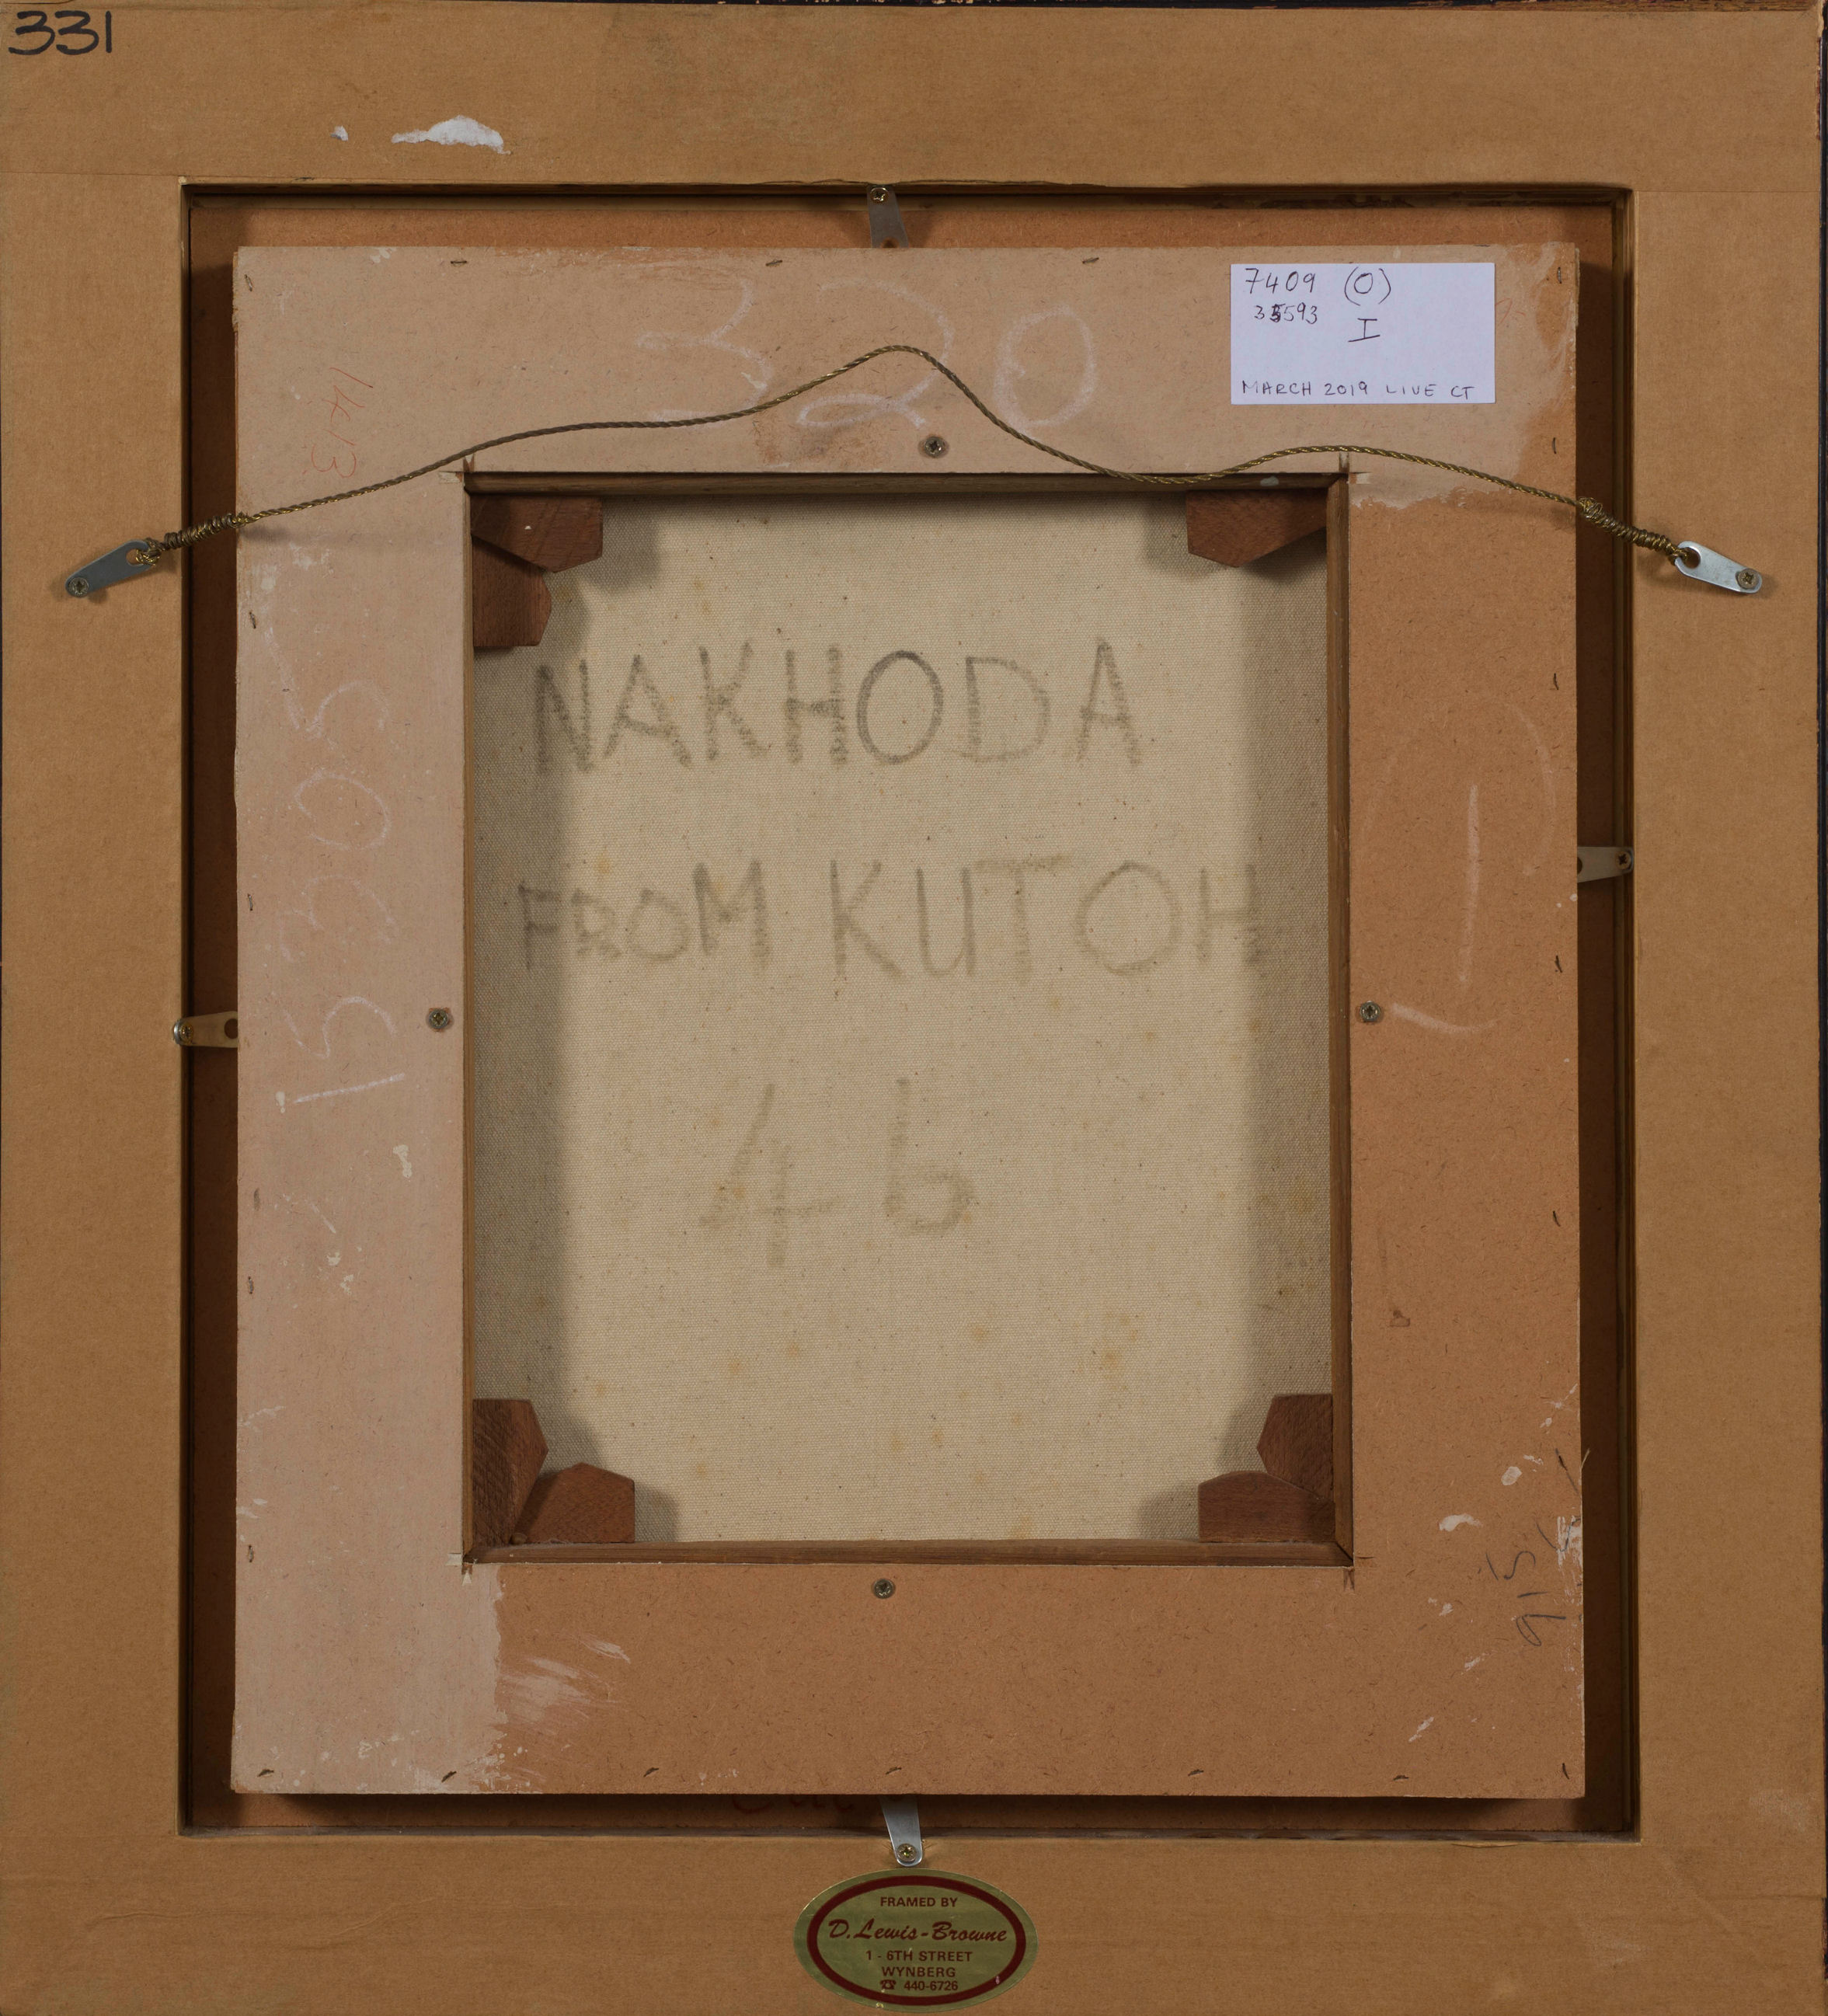 Freida Lock; Nakhoda from Kutoh